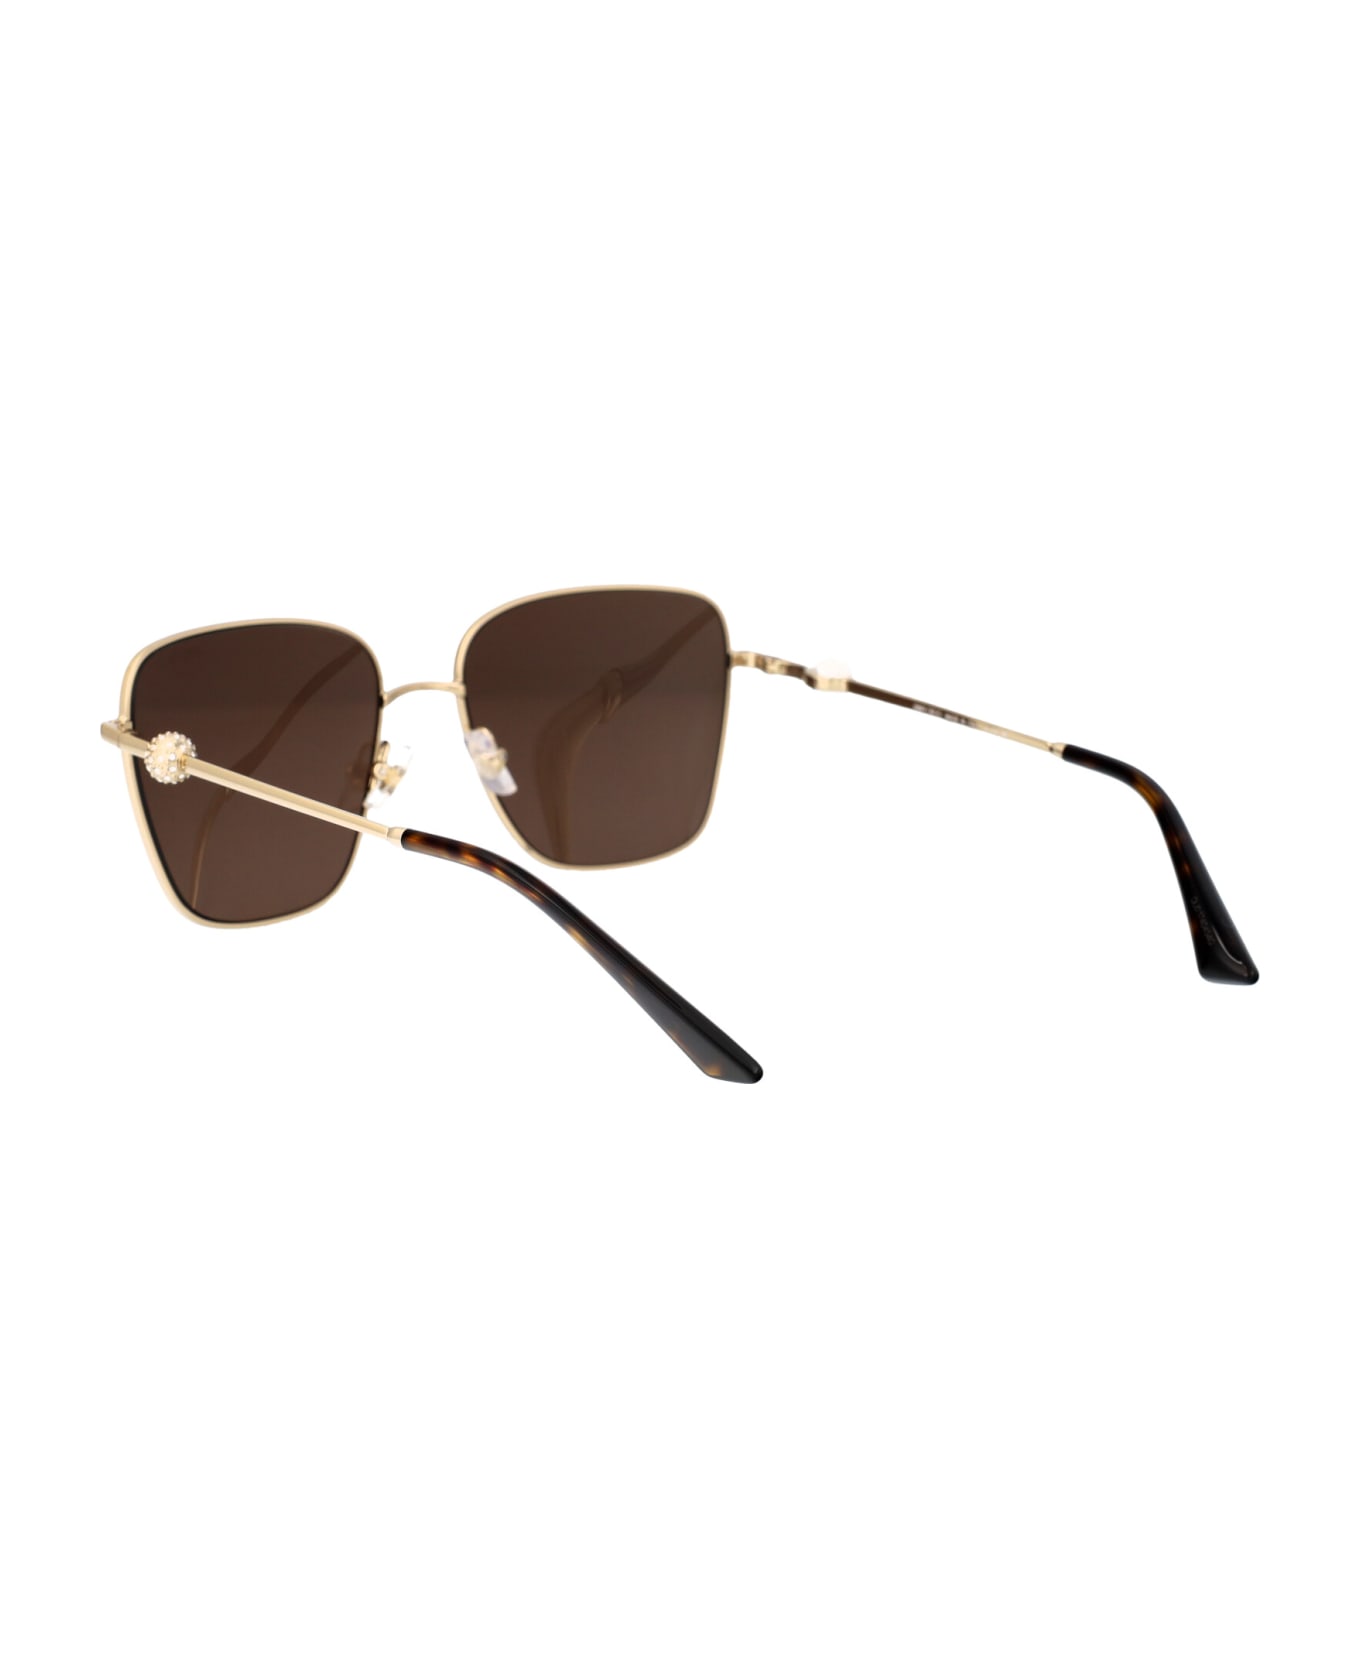 Jimmy Choo Eyewear 0jc4005hb Sunglasses - 300673 Pale Gold